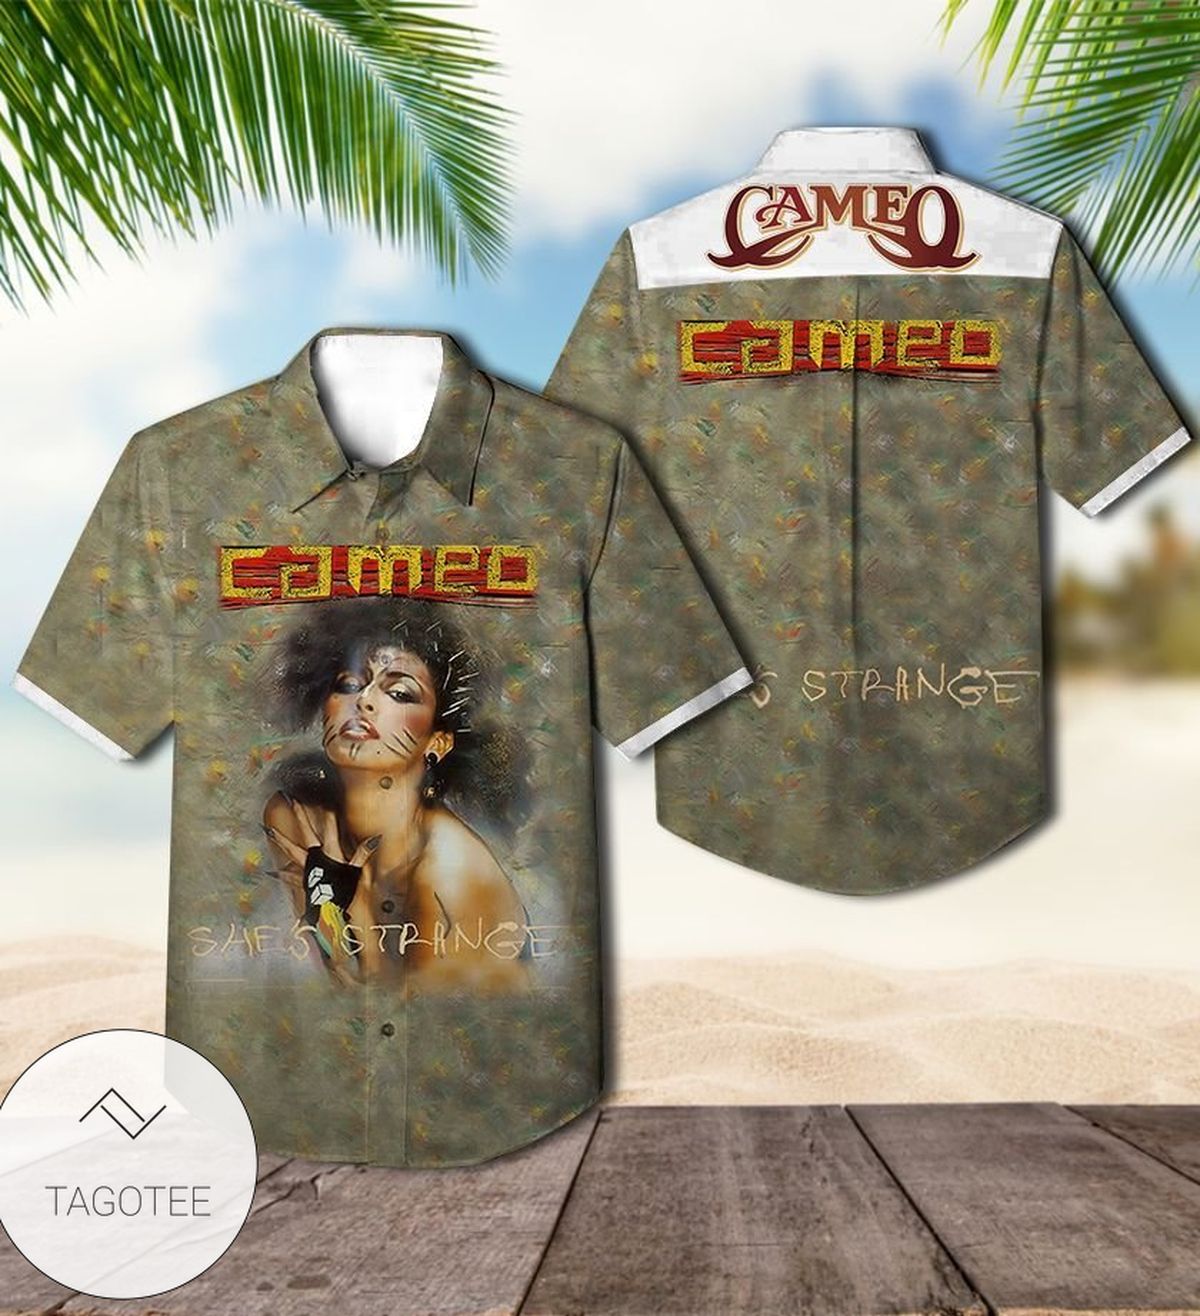 Cameo She's Strange Album Cover Hawaiian Shirt